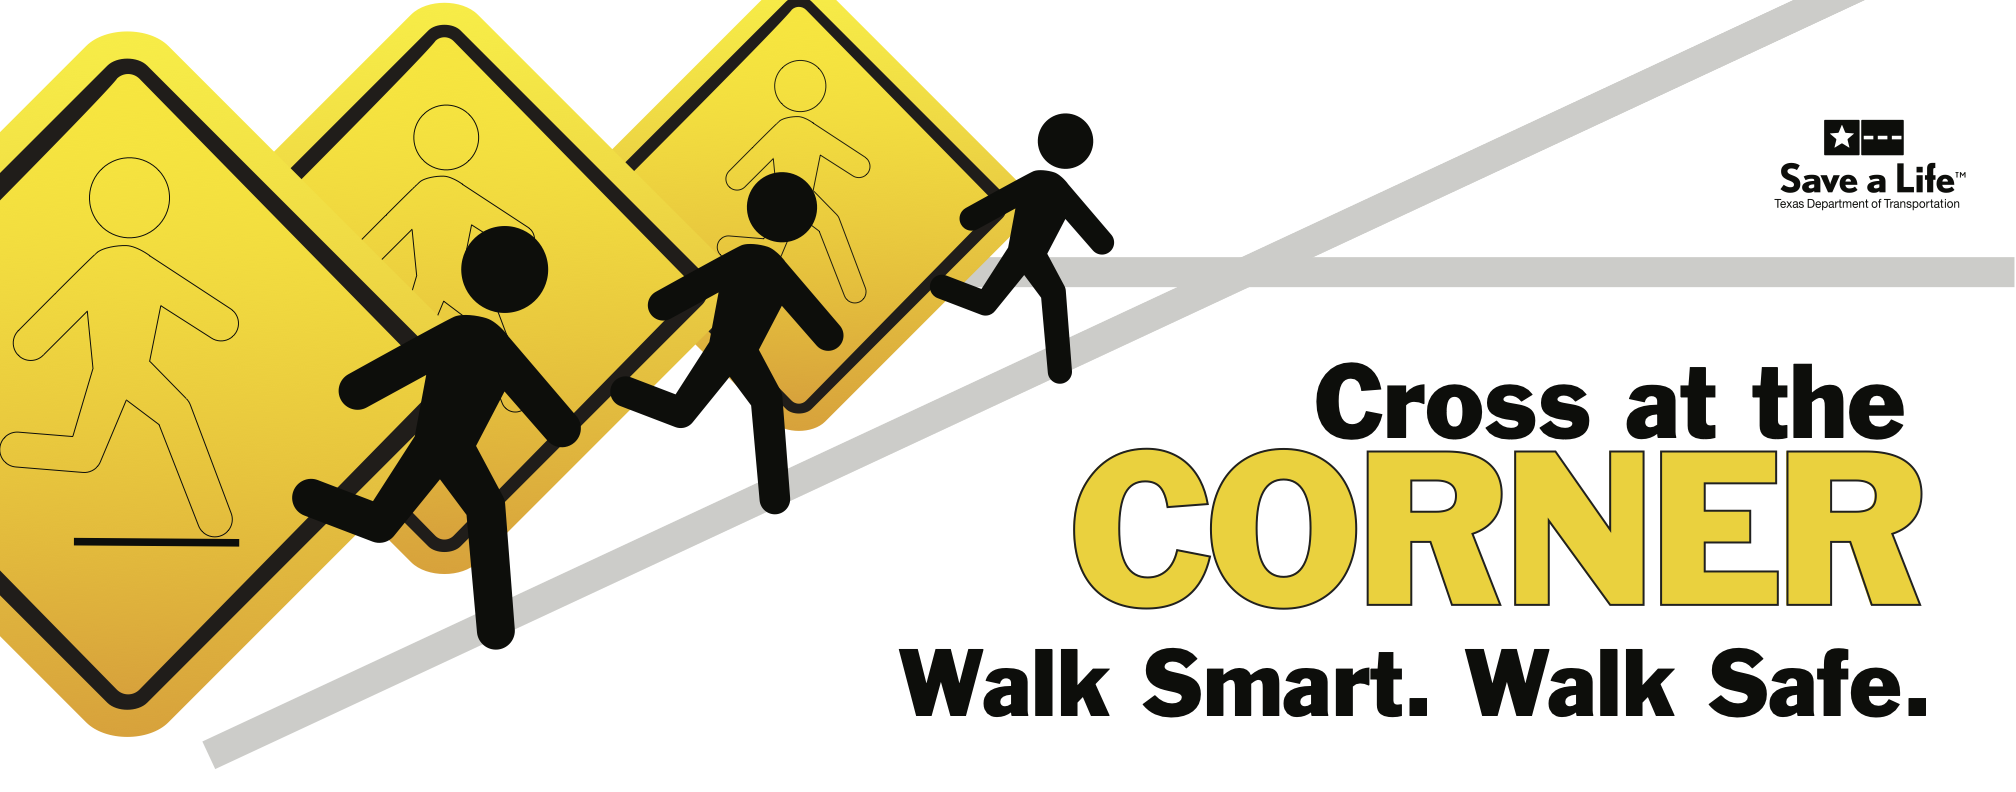 Cross at the corner. Walk smart, walk safe.